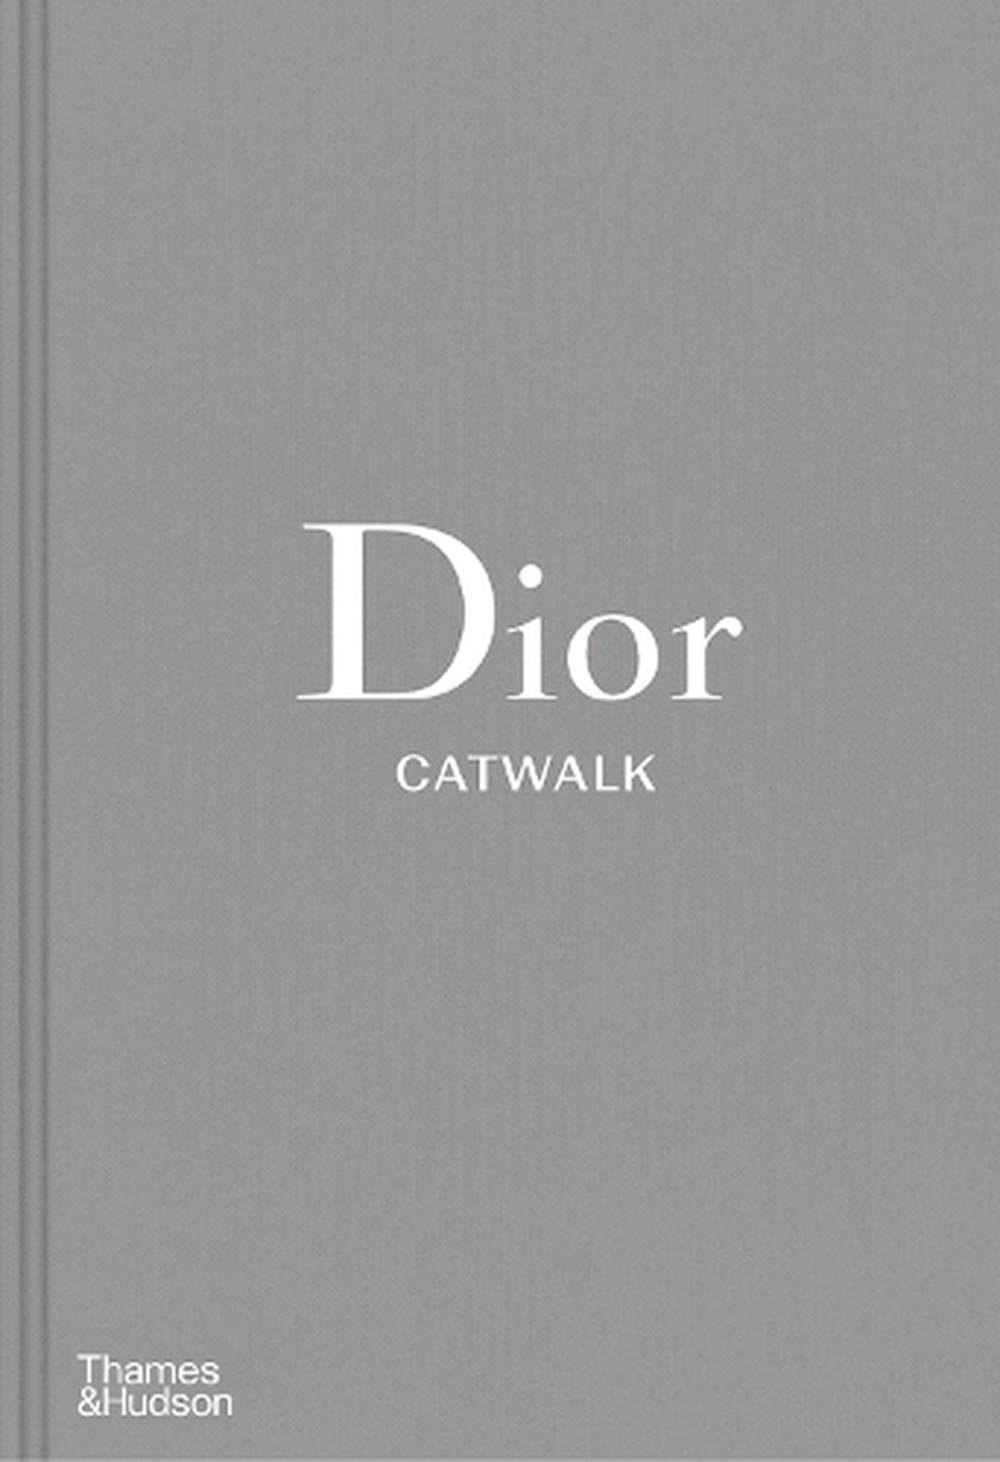 Dior Catwalk by Alexander Fury, Hardcover, 9780500519349 | Buy online ...